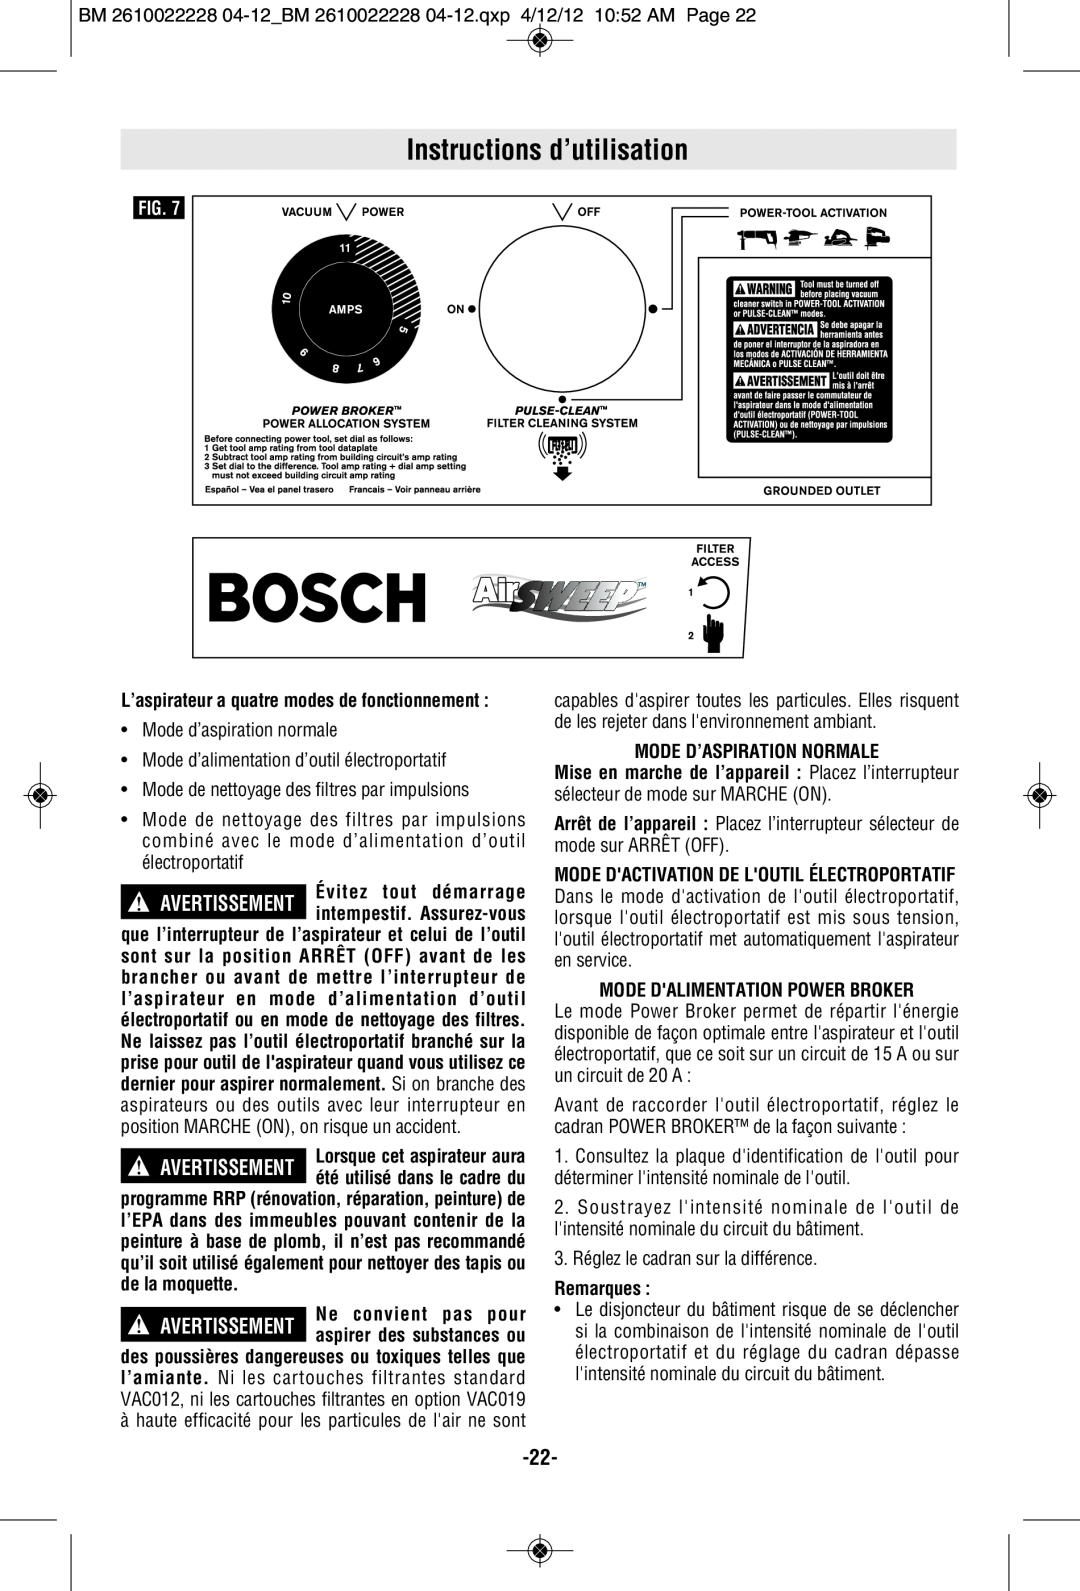 Bosch Power Tools 3931A-PB manual Instructions d’utilisation, Mode D’Aspiration Normale, Mode Dalimentation Power Broker 